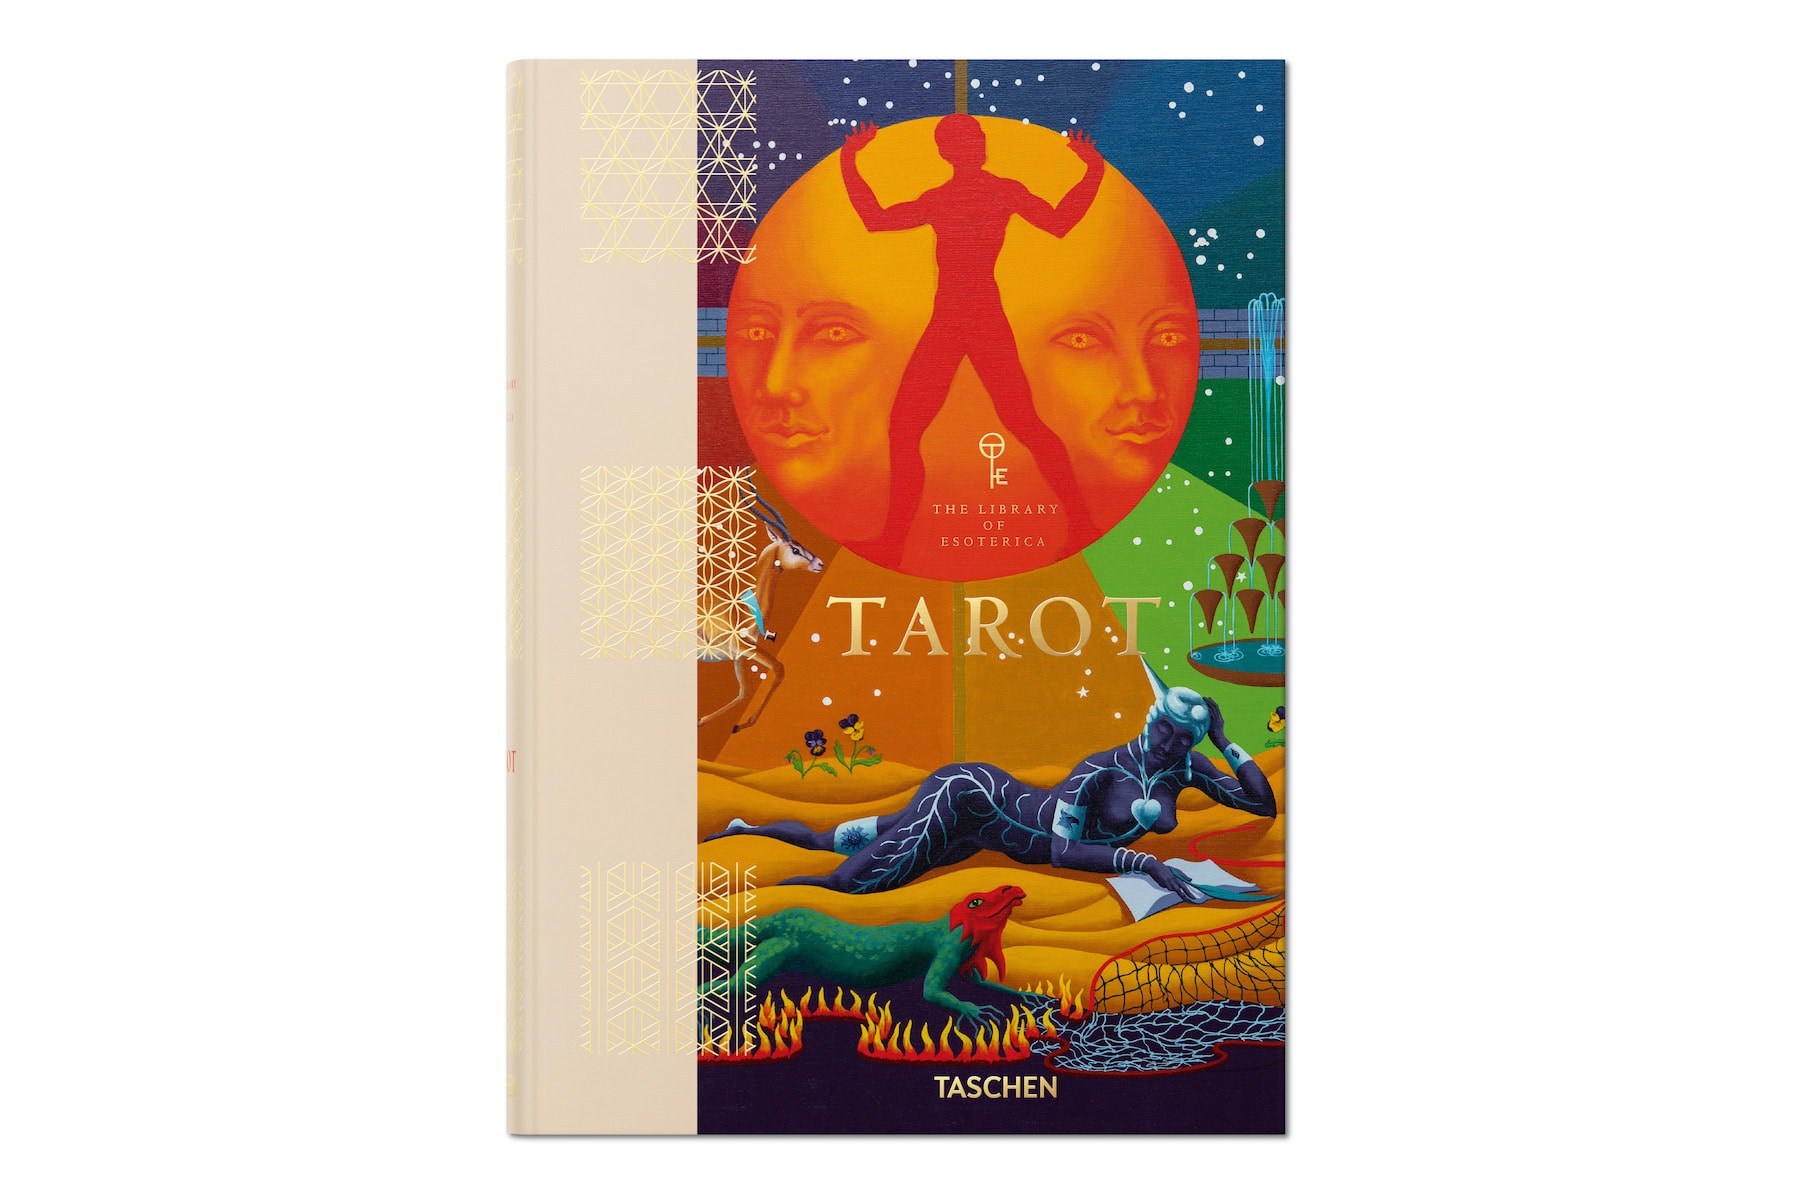 TASCHEN 全新书籍《Tarot》正式上架